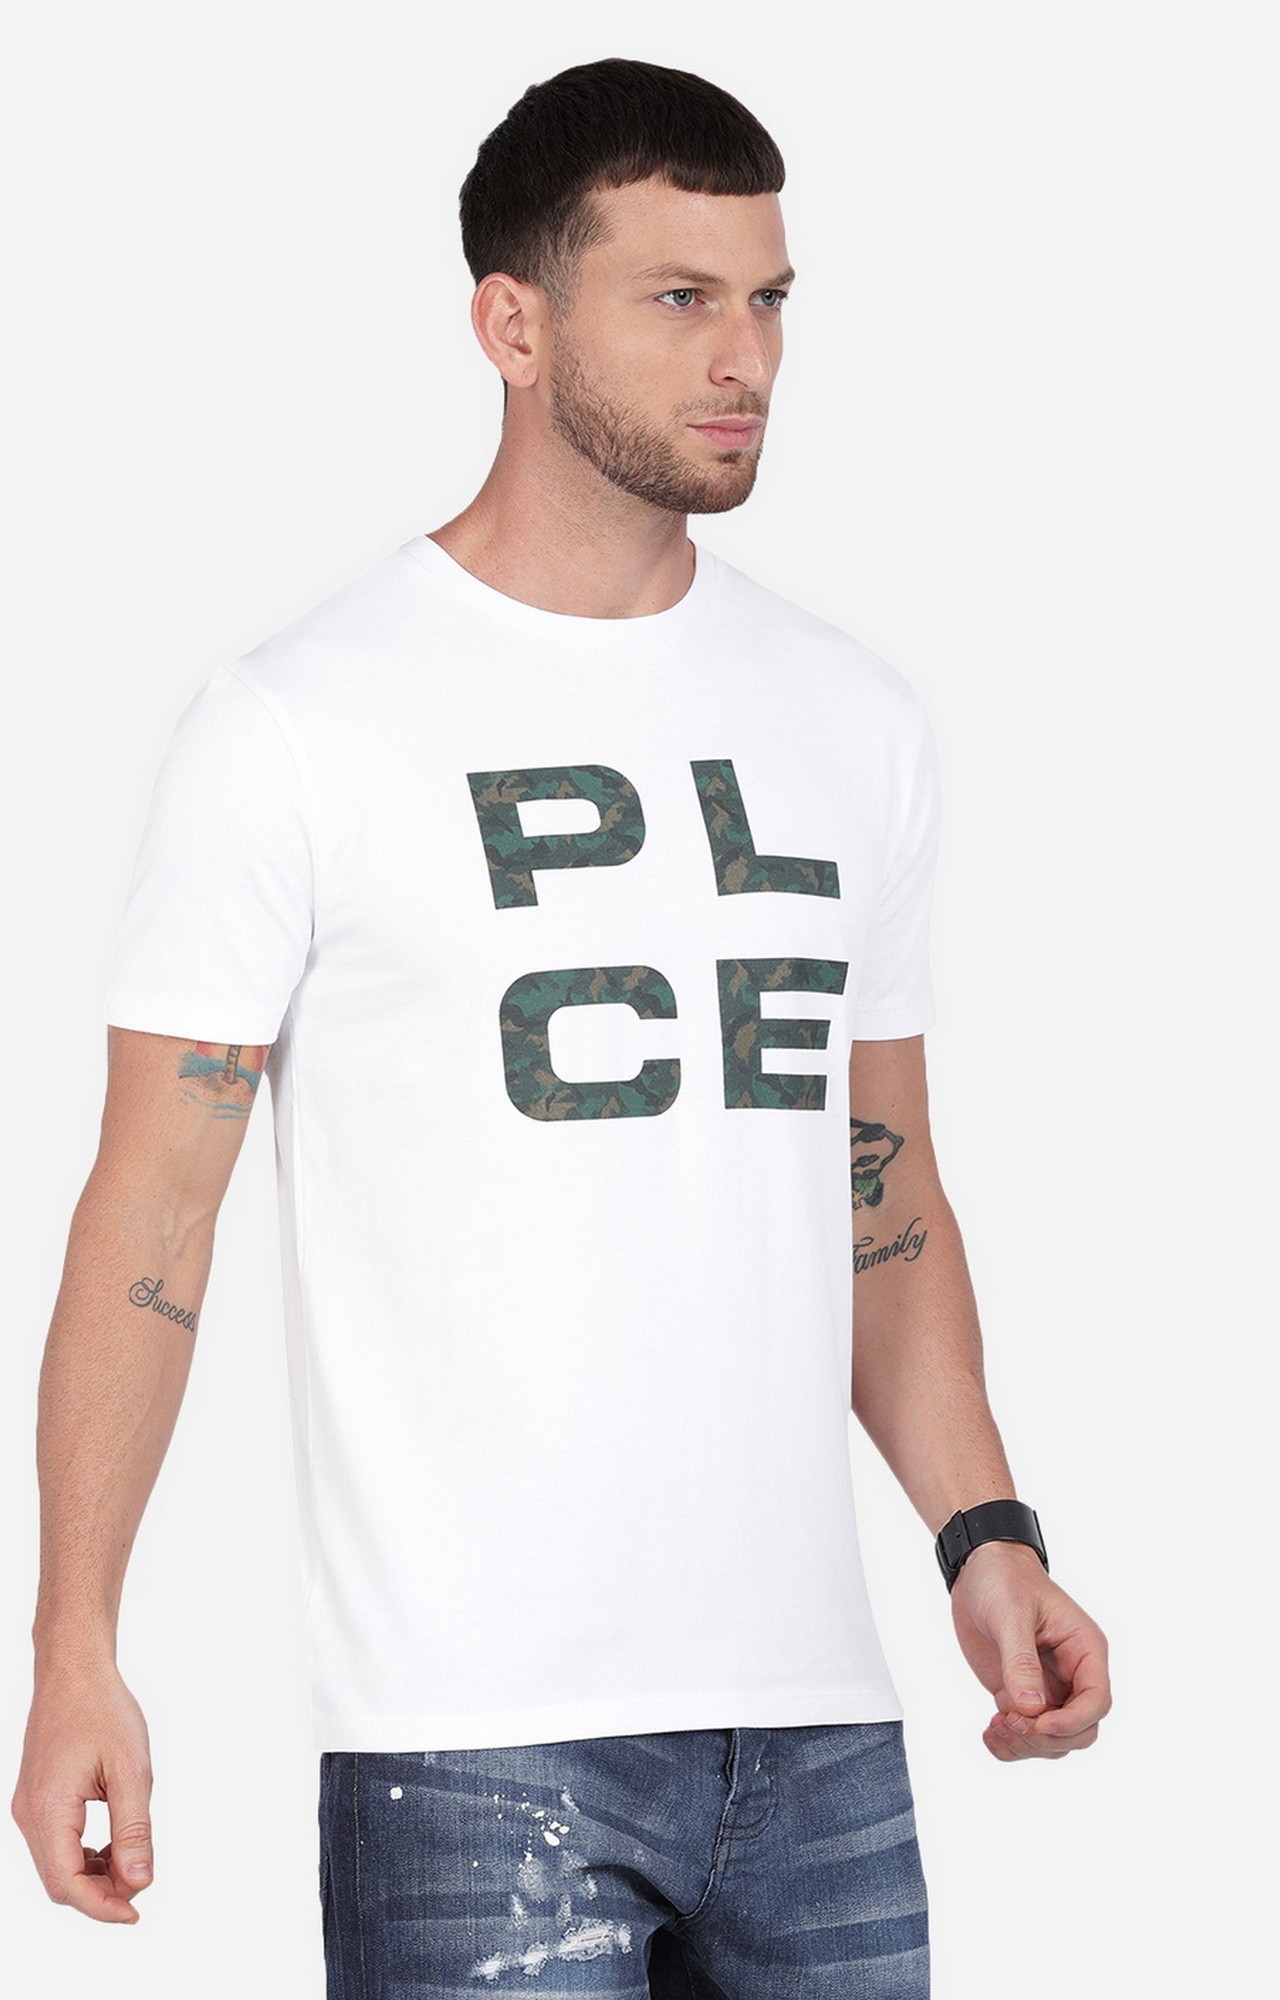 883 Police | Men's White Cotton Typographic Printed T-Shirt 3